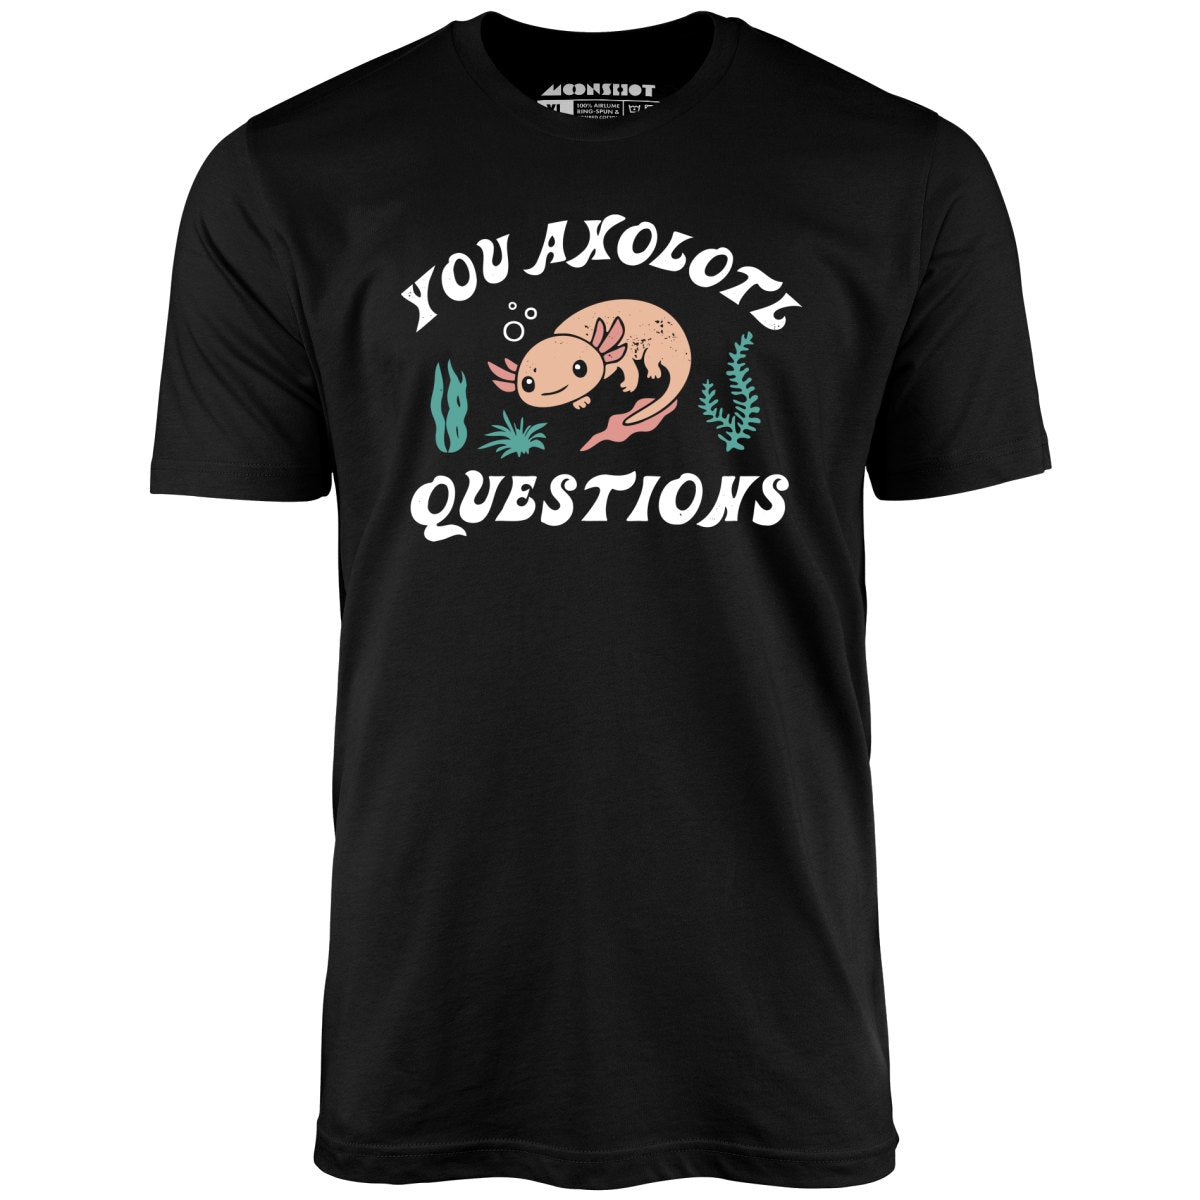 You Axolotl Questions - Unisex T-Shirt